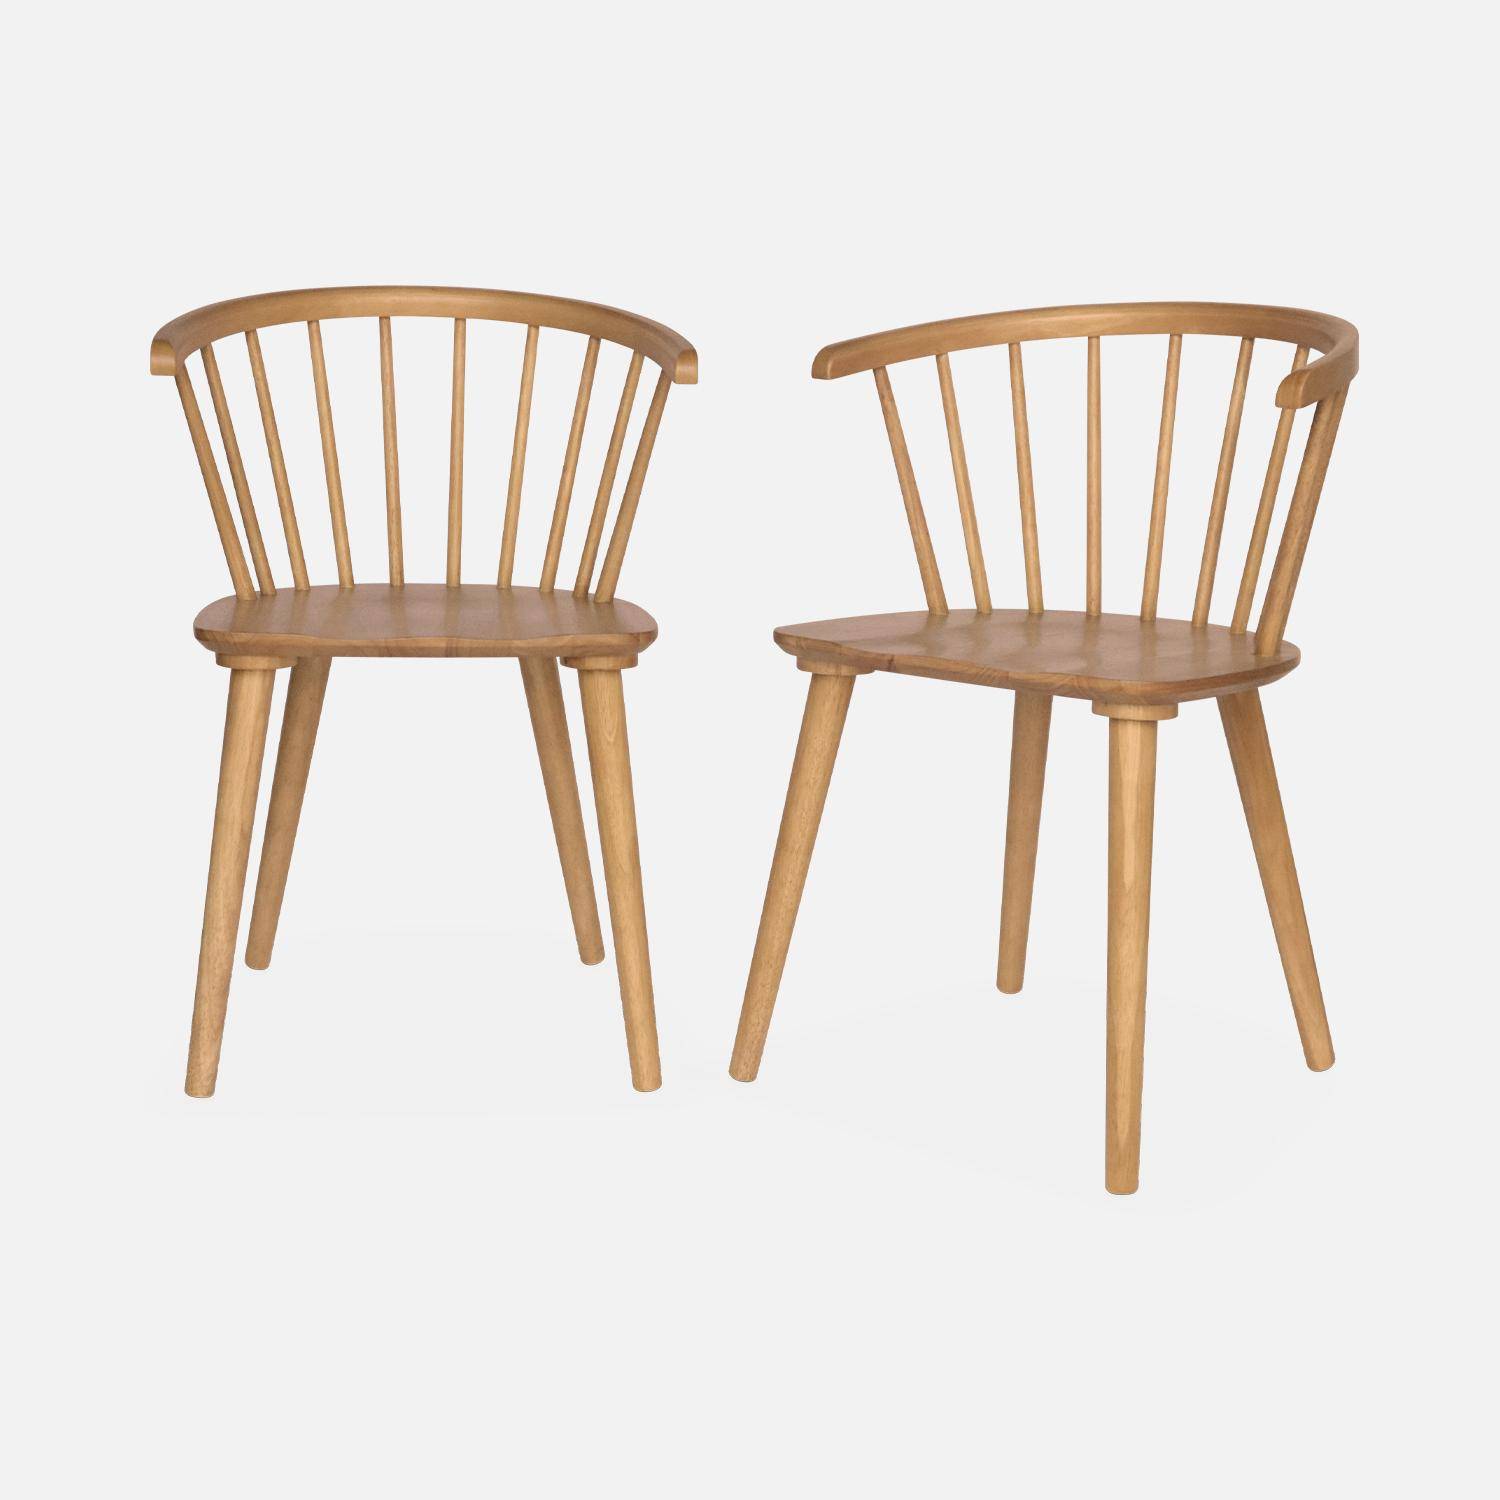 Lote de 2 sillas de bar de madera natural y contrachapada, Paula, An 51 x Pr 53 x Al 75cm,sweeek,Photo3